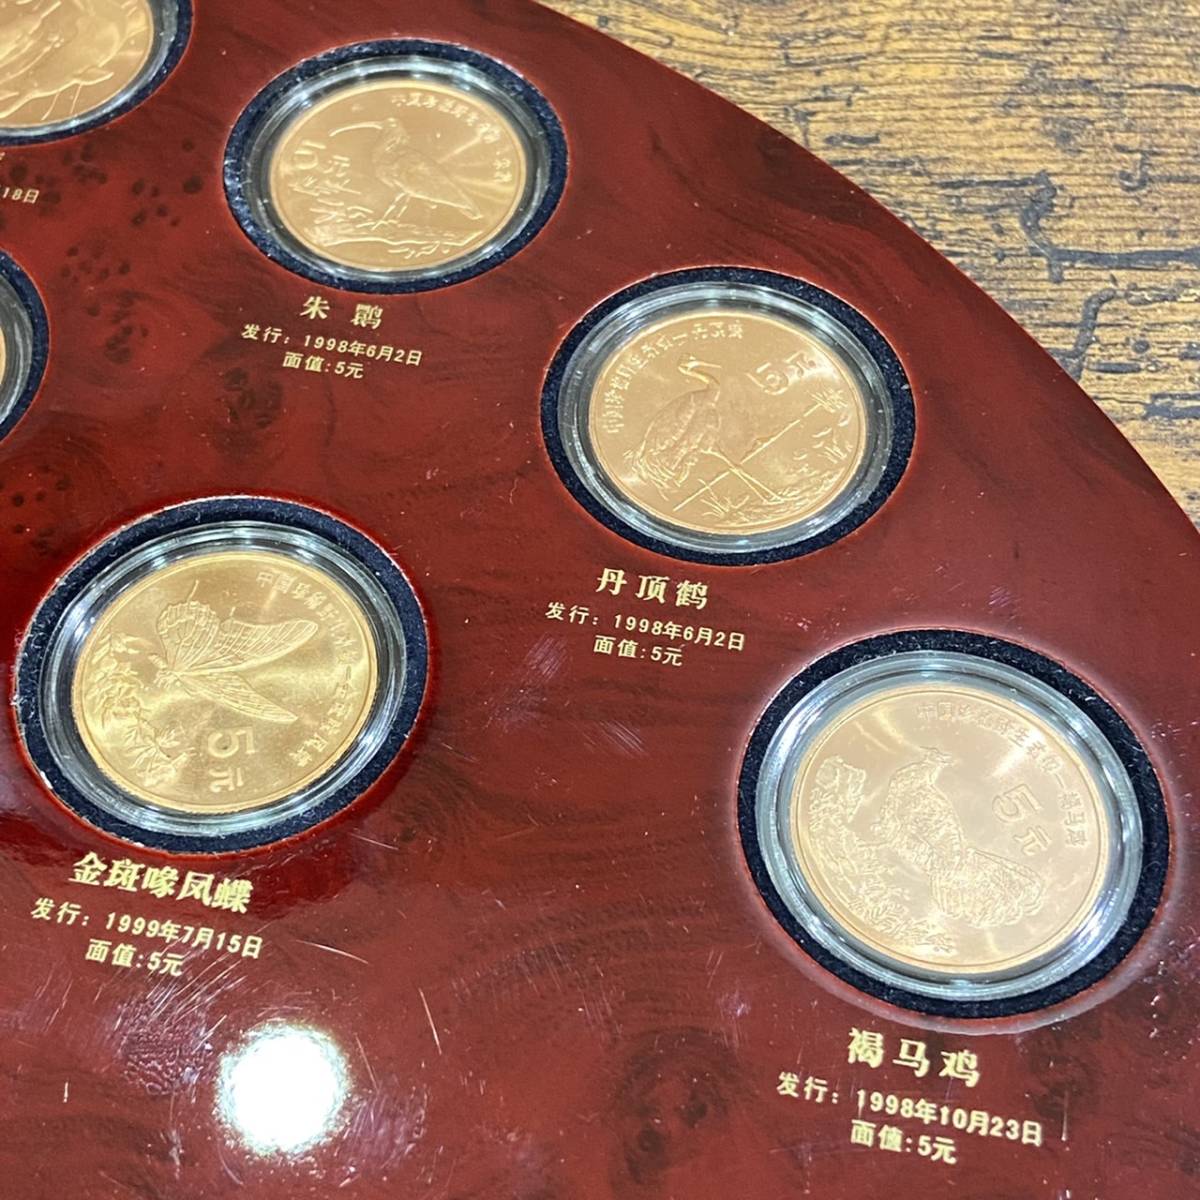 China 中國 中国 珍奇 野生動物 紀念幣 珍稀 メダル 5元 10種完 扇形 観賞 レトロ 年代物 時代物 コレクション 外箱付き 1040_画像5